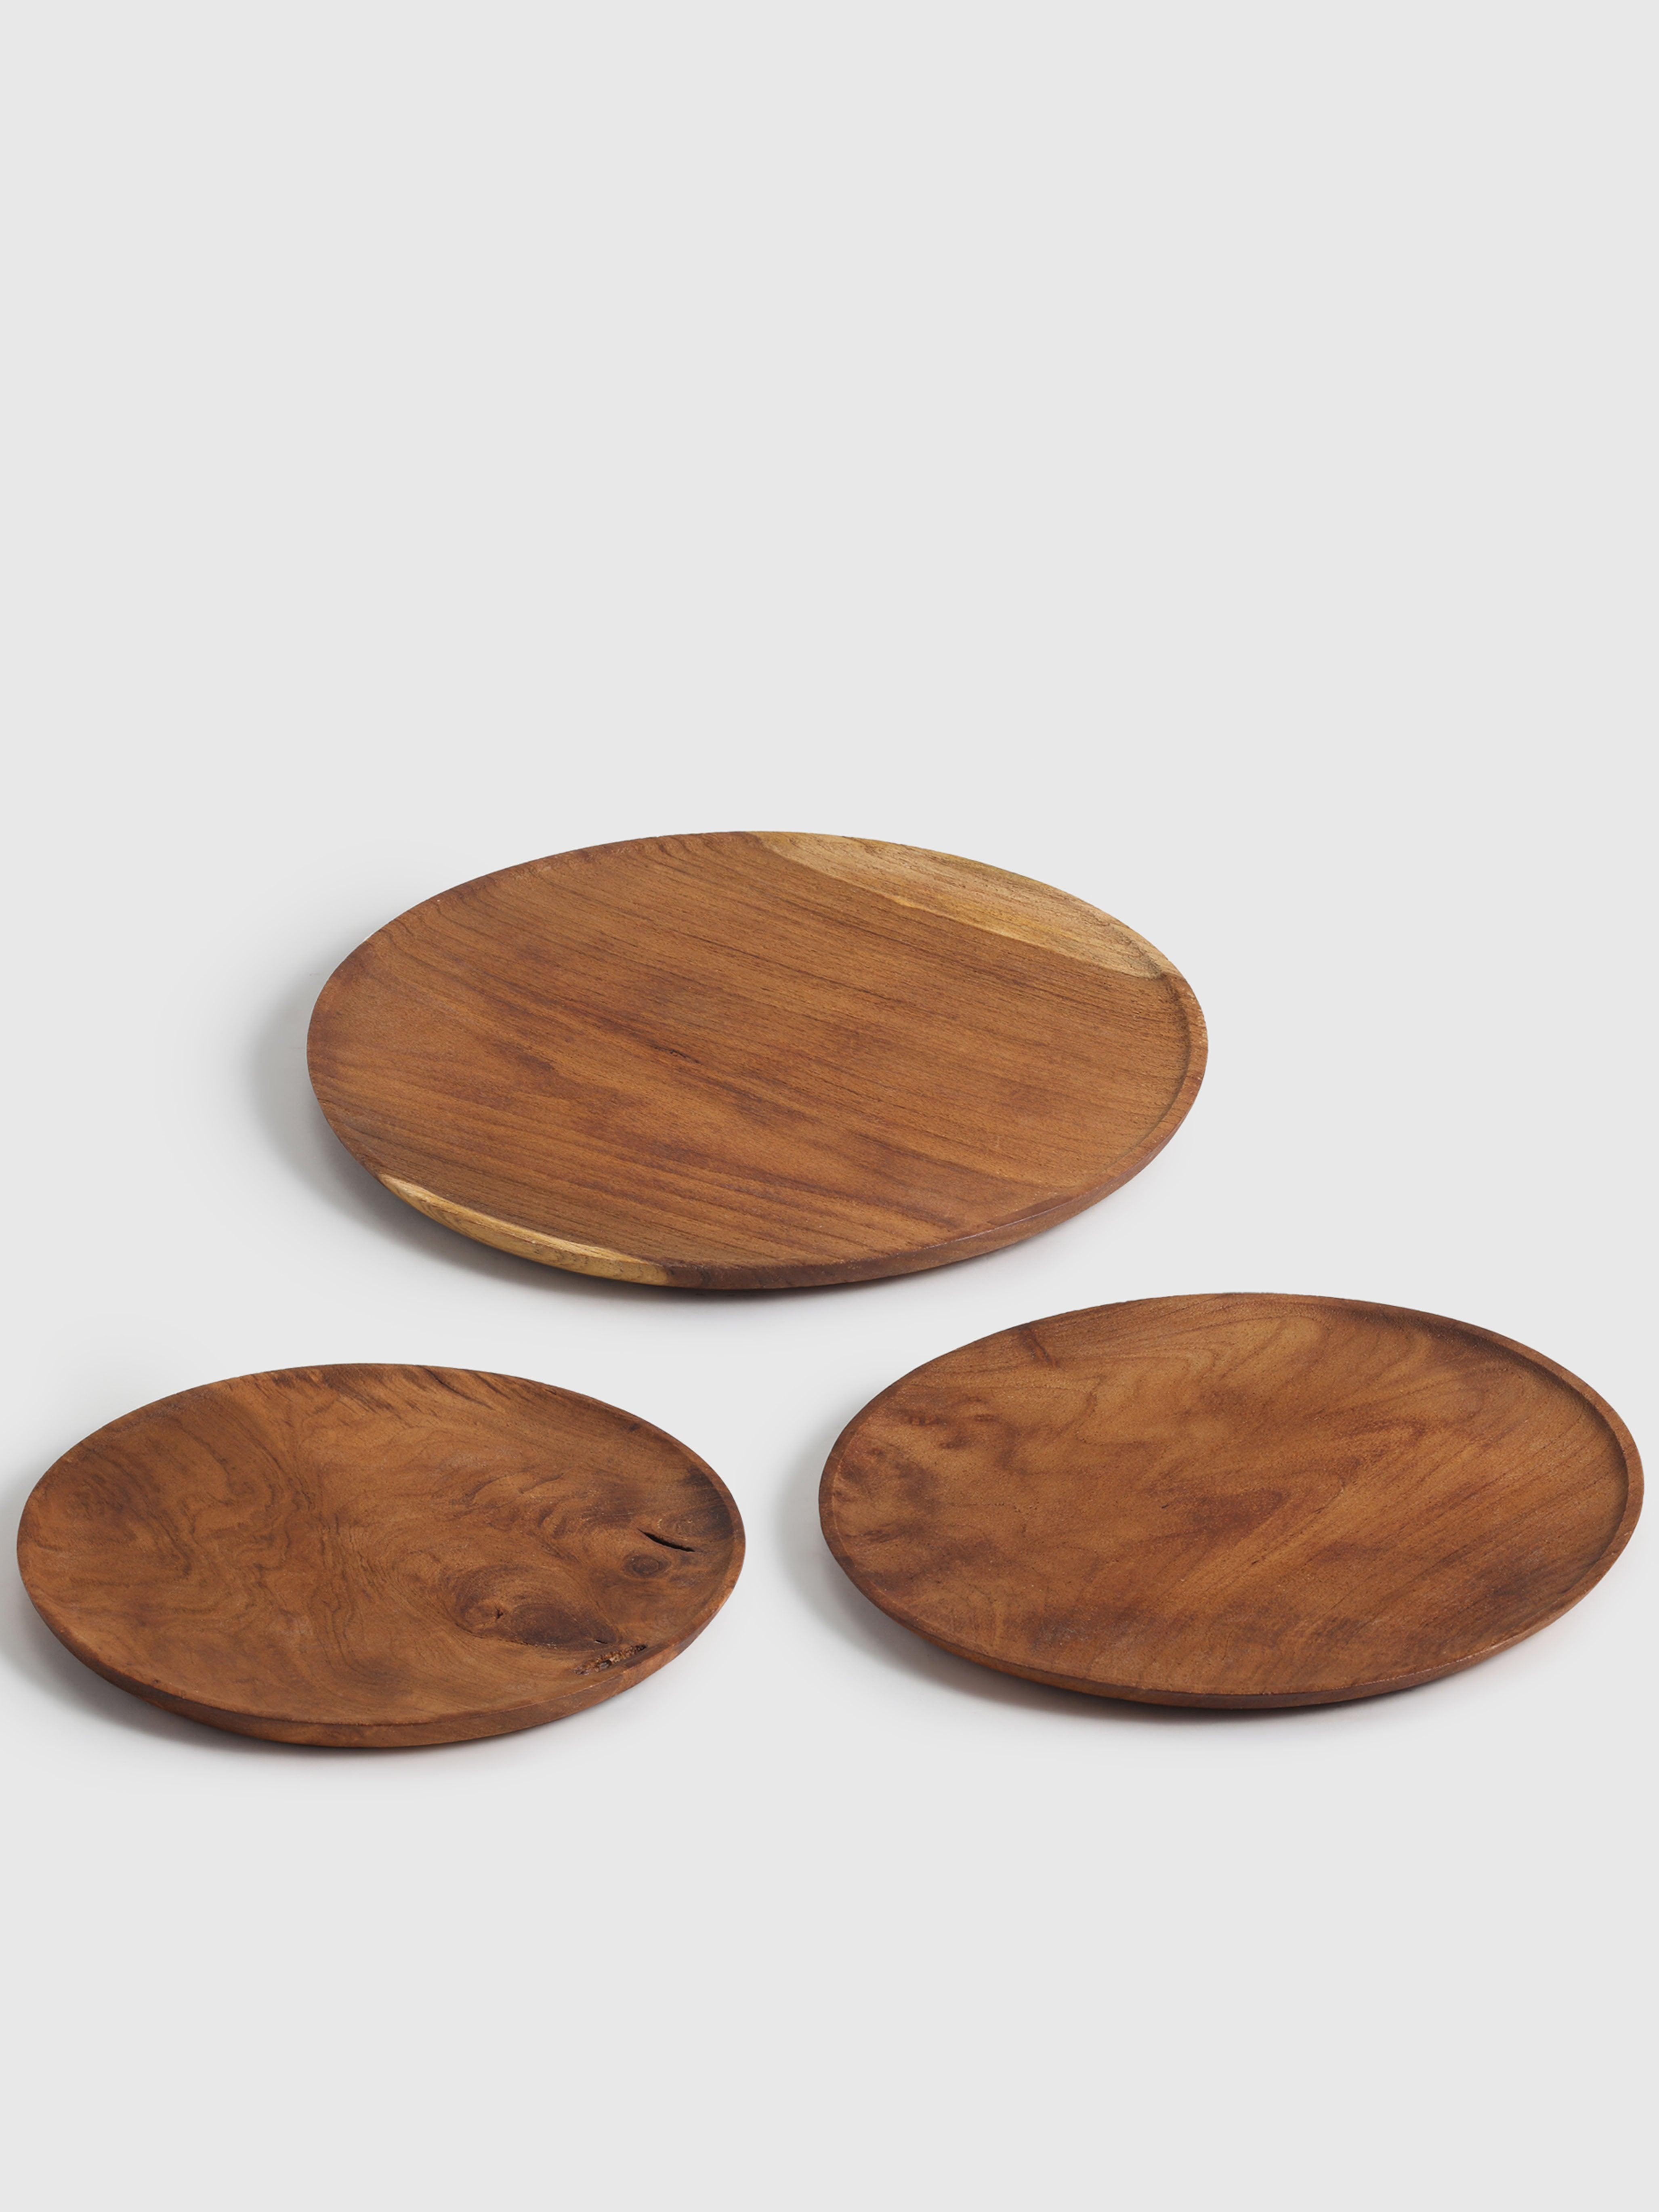 Mosaic Wood Plates set of 3 - Living Shapes